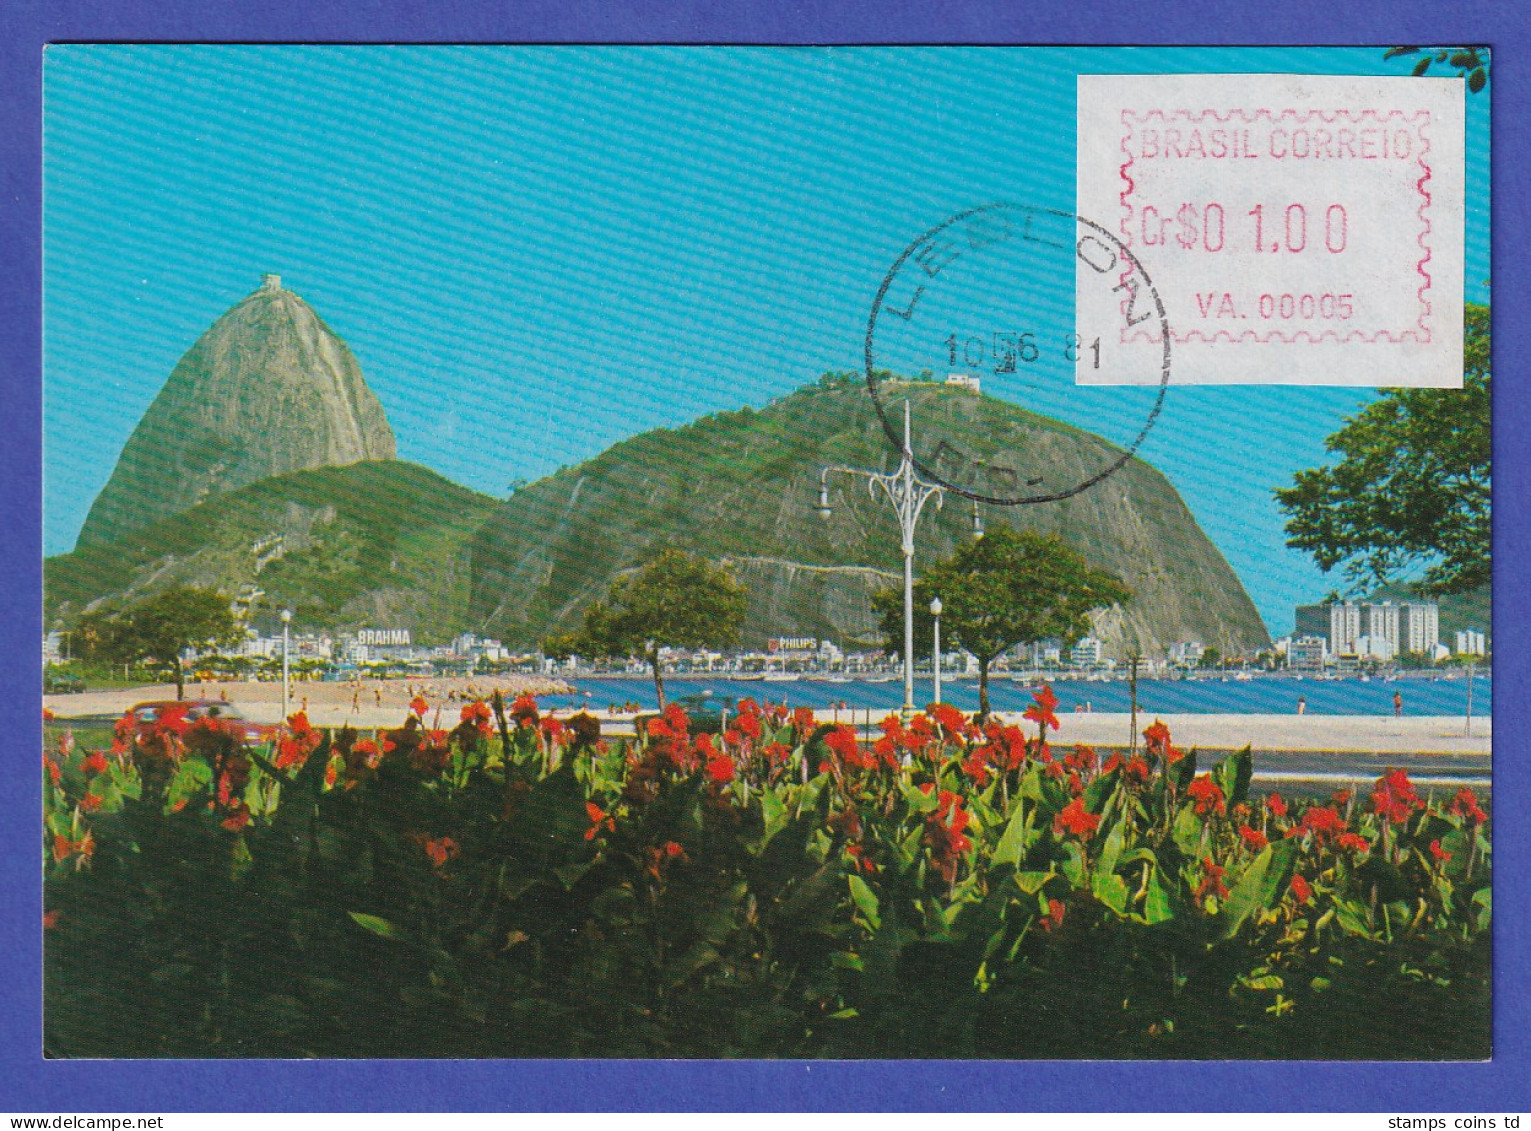 Brasilien Frama-ATM AG.00006 Und VA.00005 LEBLON Auf Ansichtskarte, O 10.06.81 - Automatenmarken (Frama)